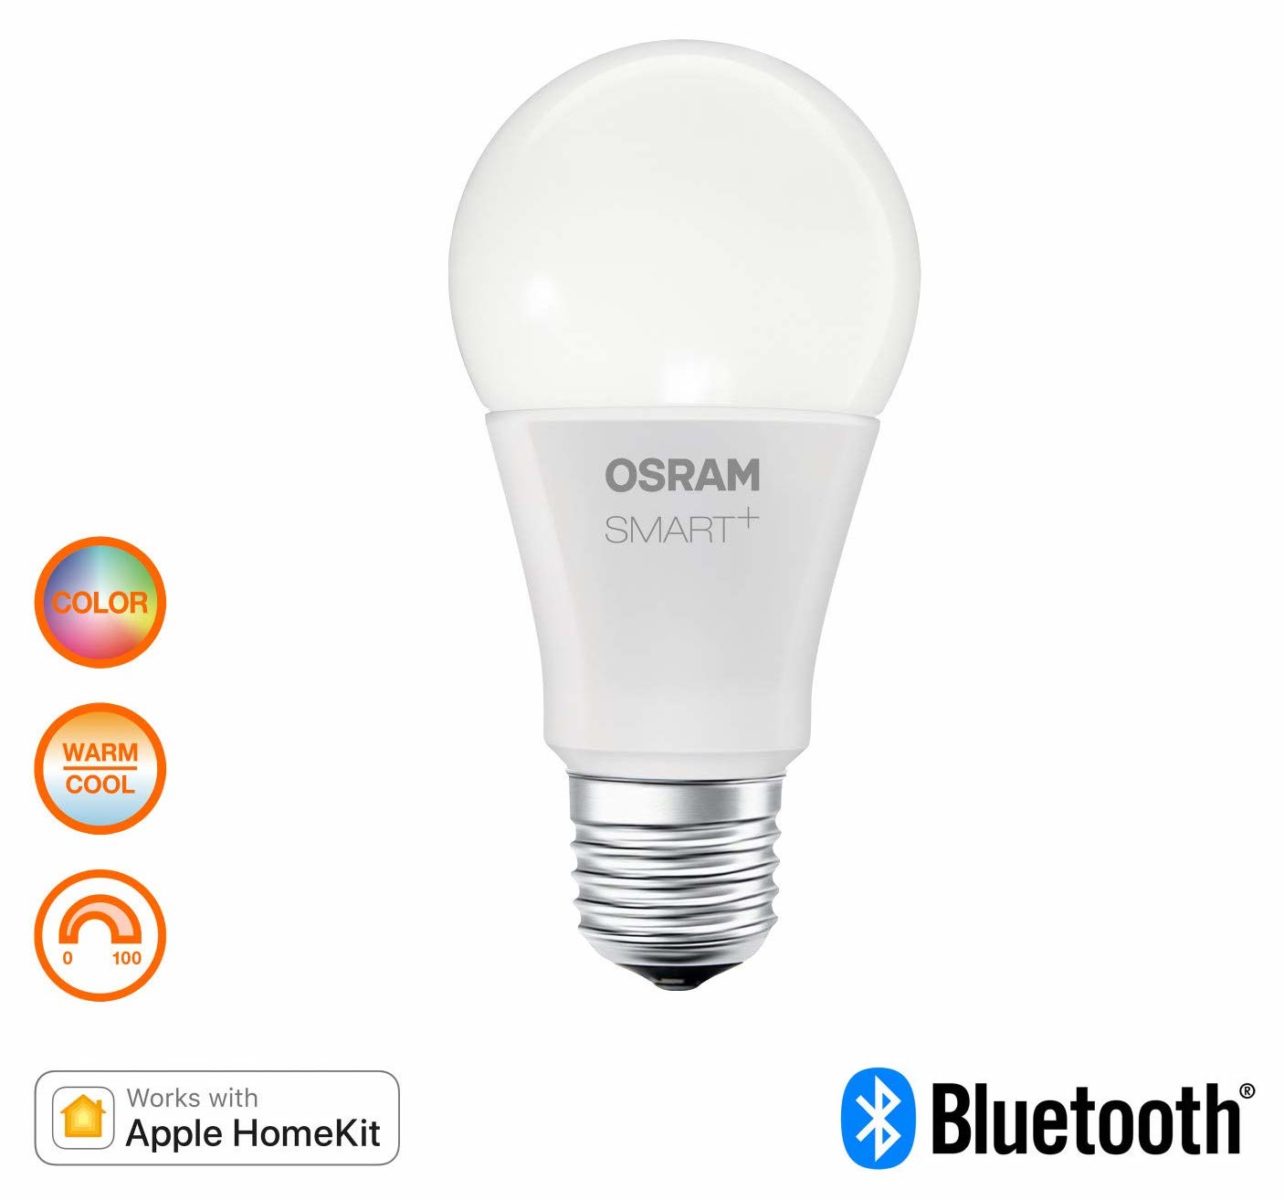 Lampadina Colore Osram Bluetooth compatibile Homekit e Android: in offerta a 19,99 Euro